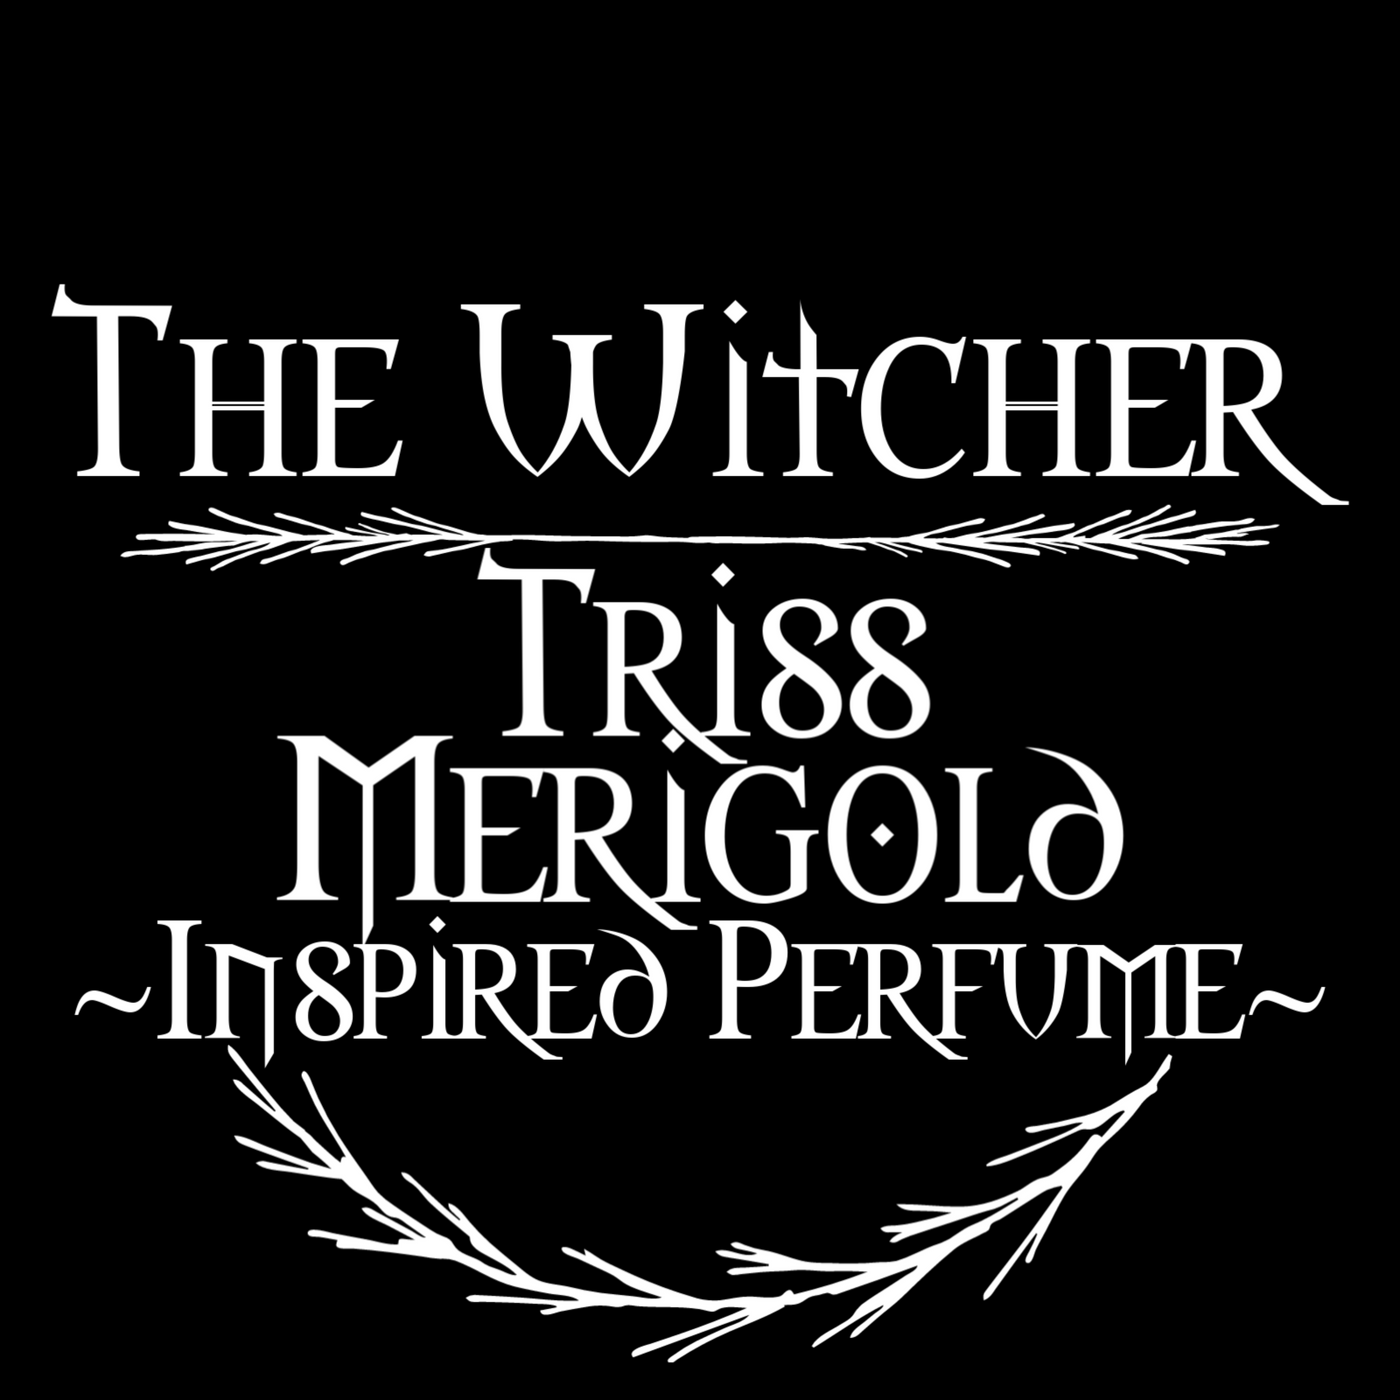 Triss Merigold inspired perfume (Honeycrisp apples, Caramel, Spices/Peony, Amber, Vanilla)